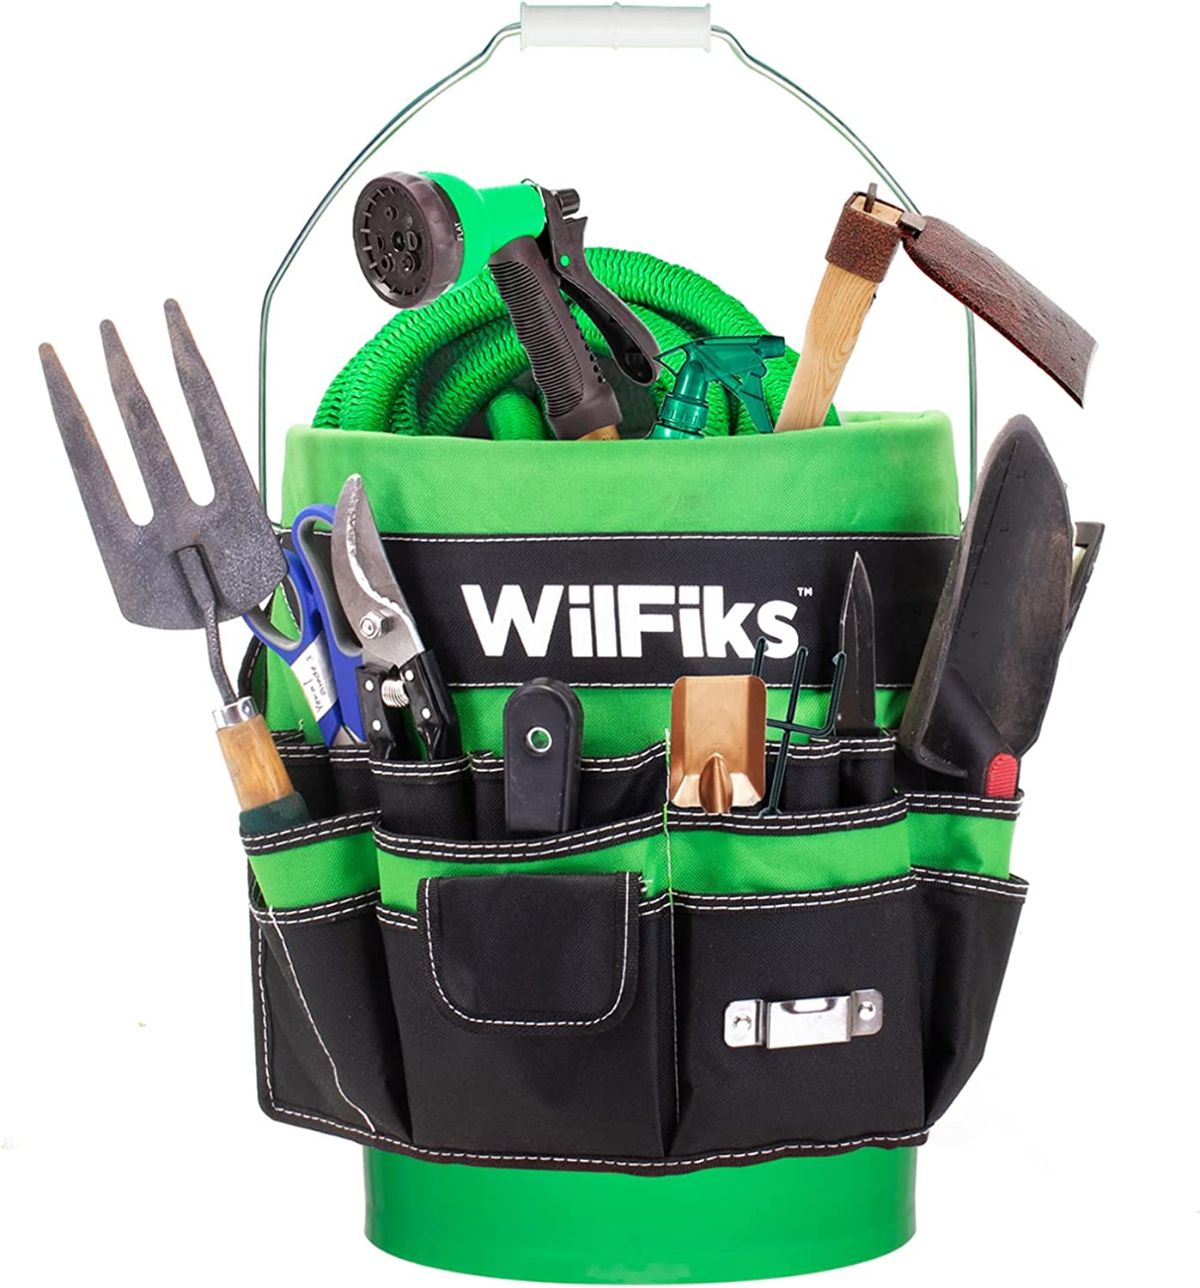 A five-gallon bucket construction tool organizer used for garden tool organization